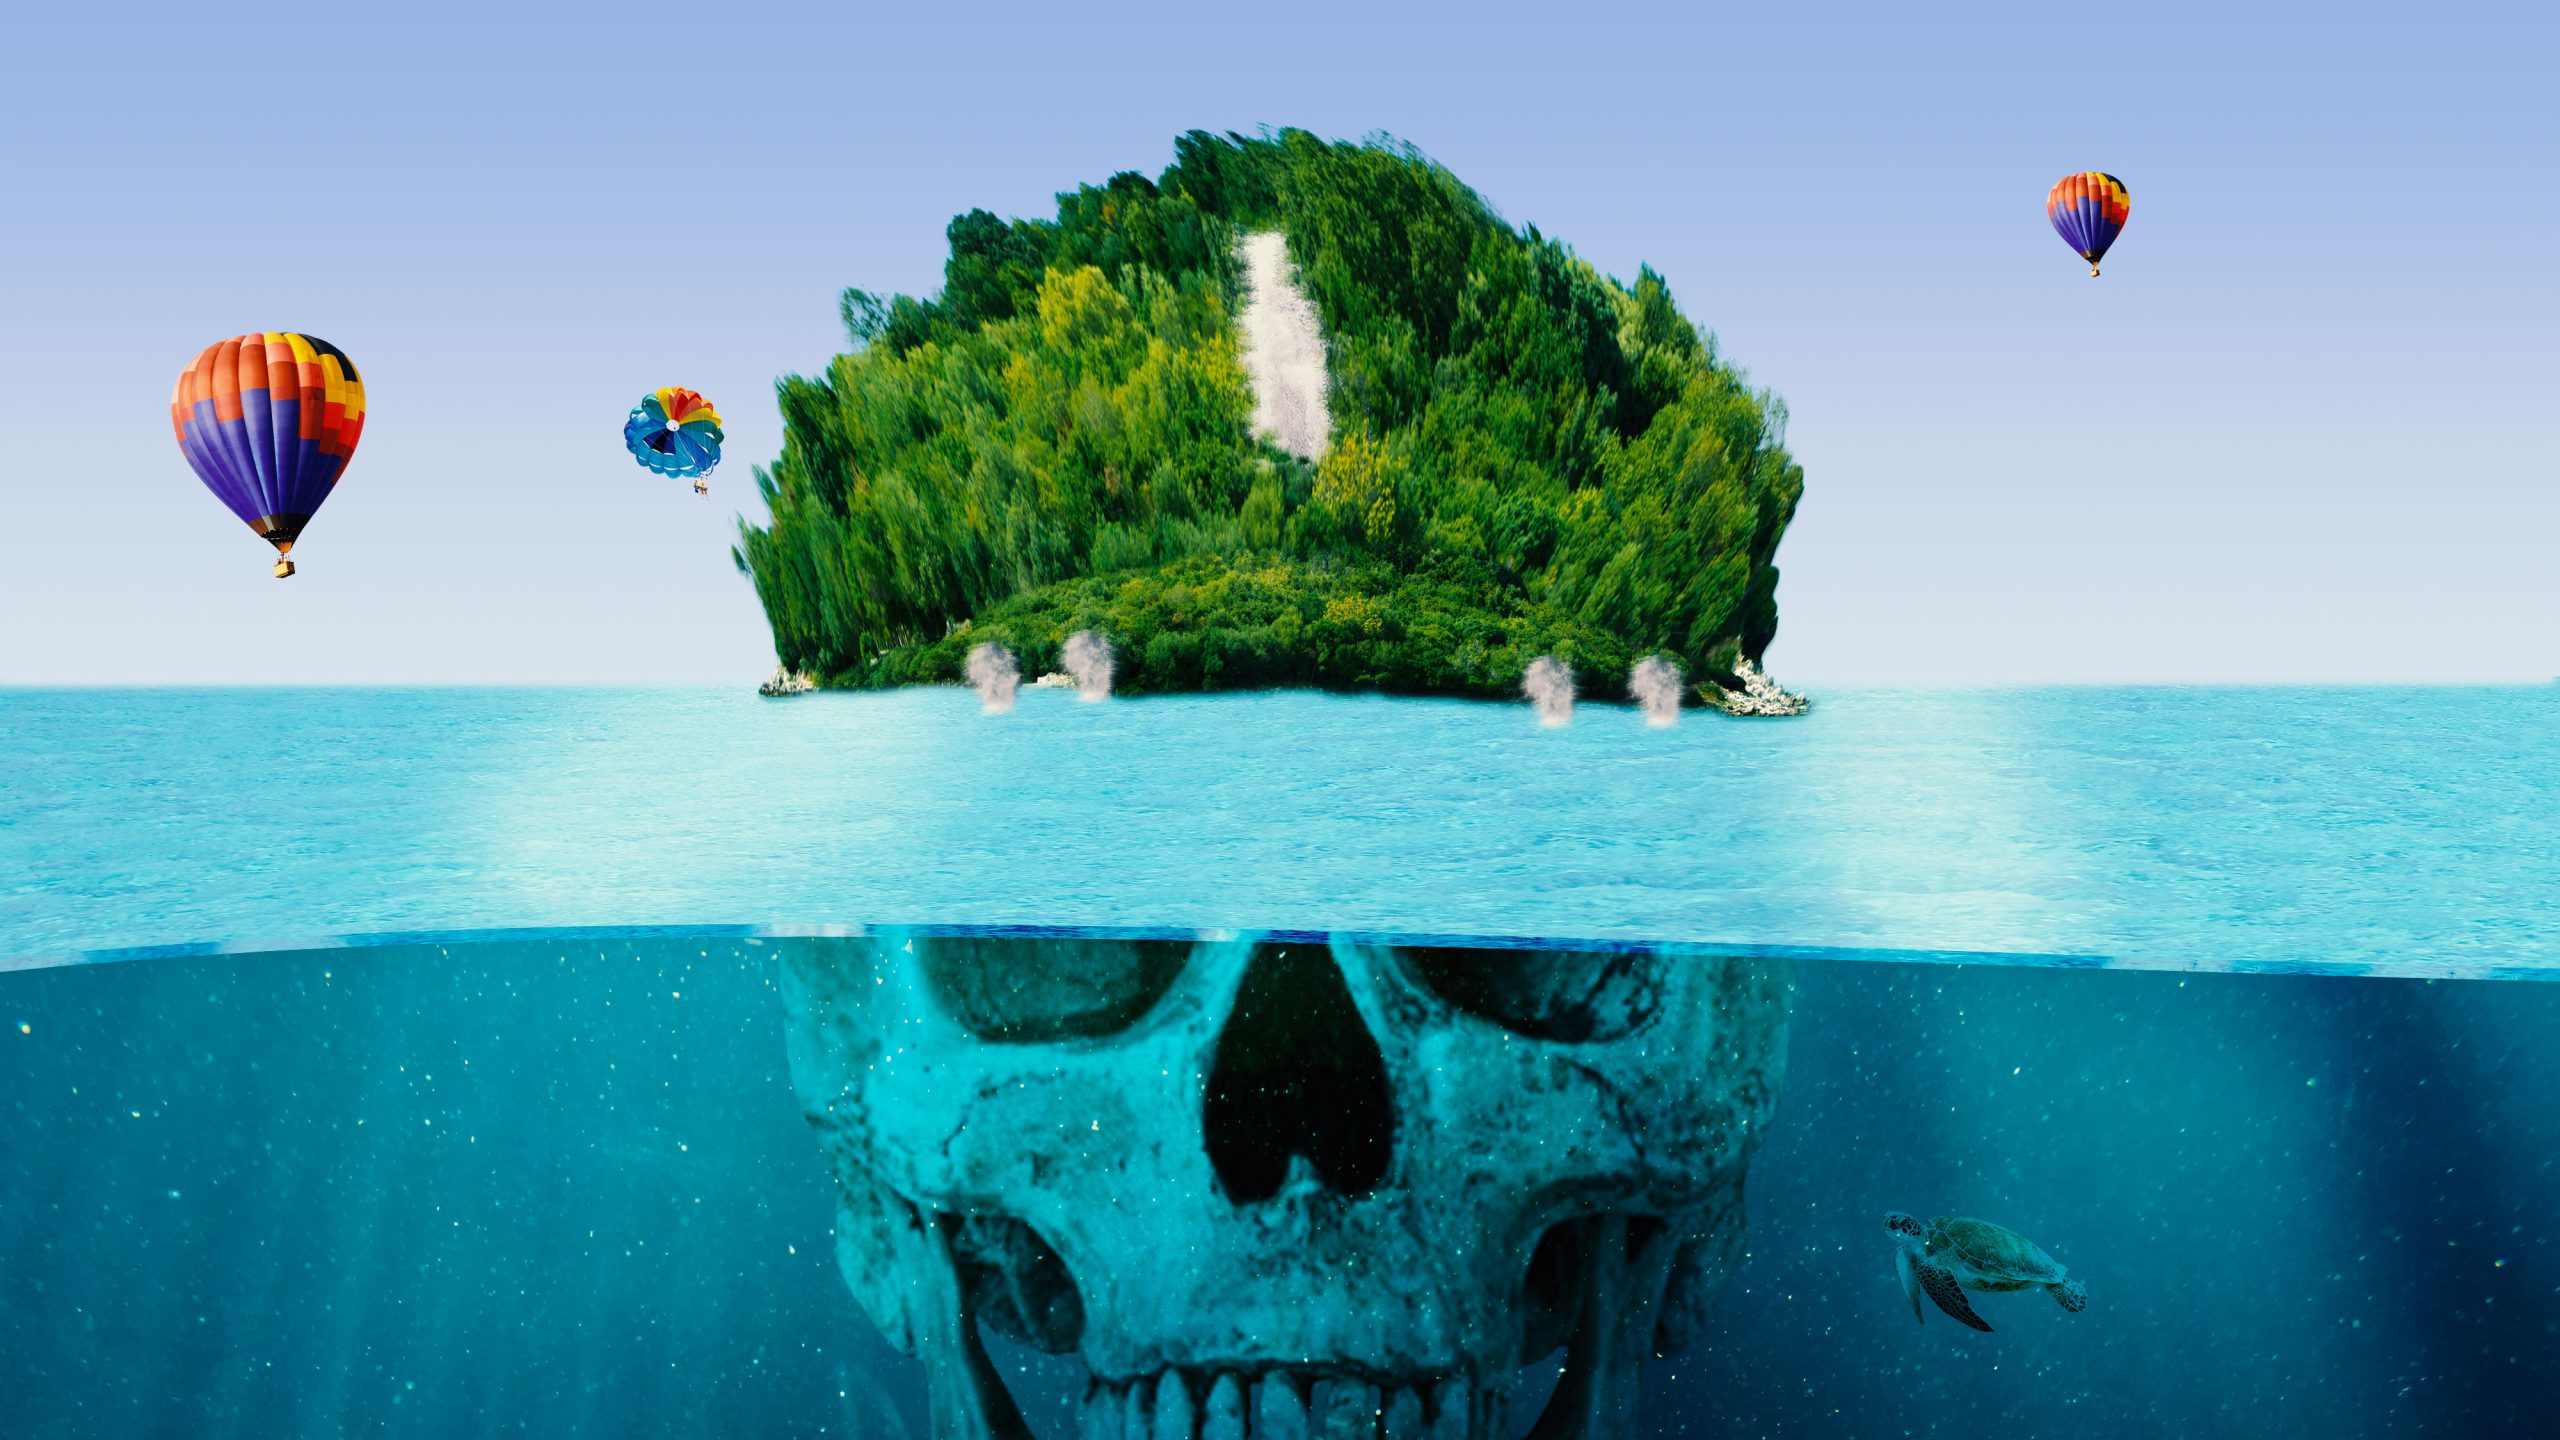 Skull Underwater
 Wallpapers